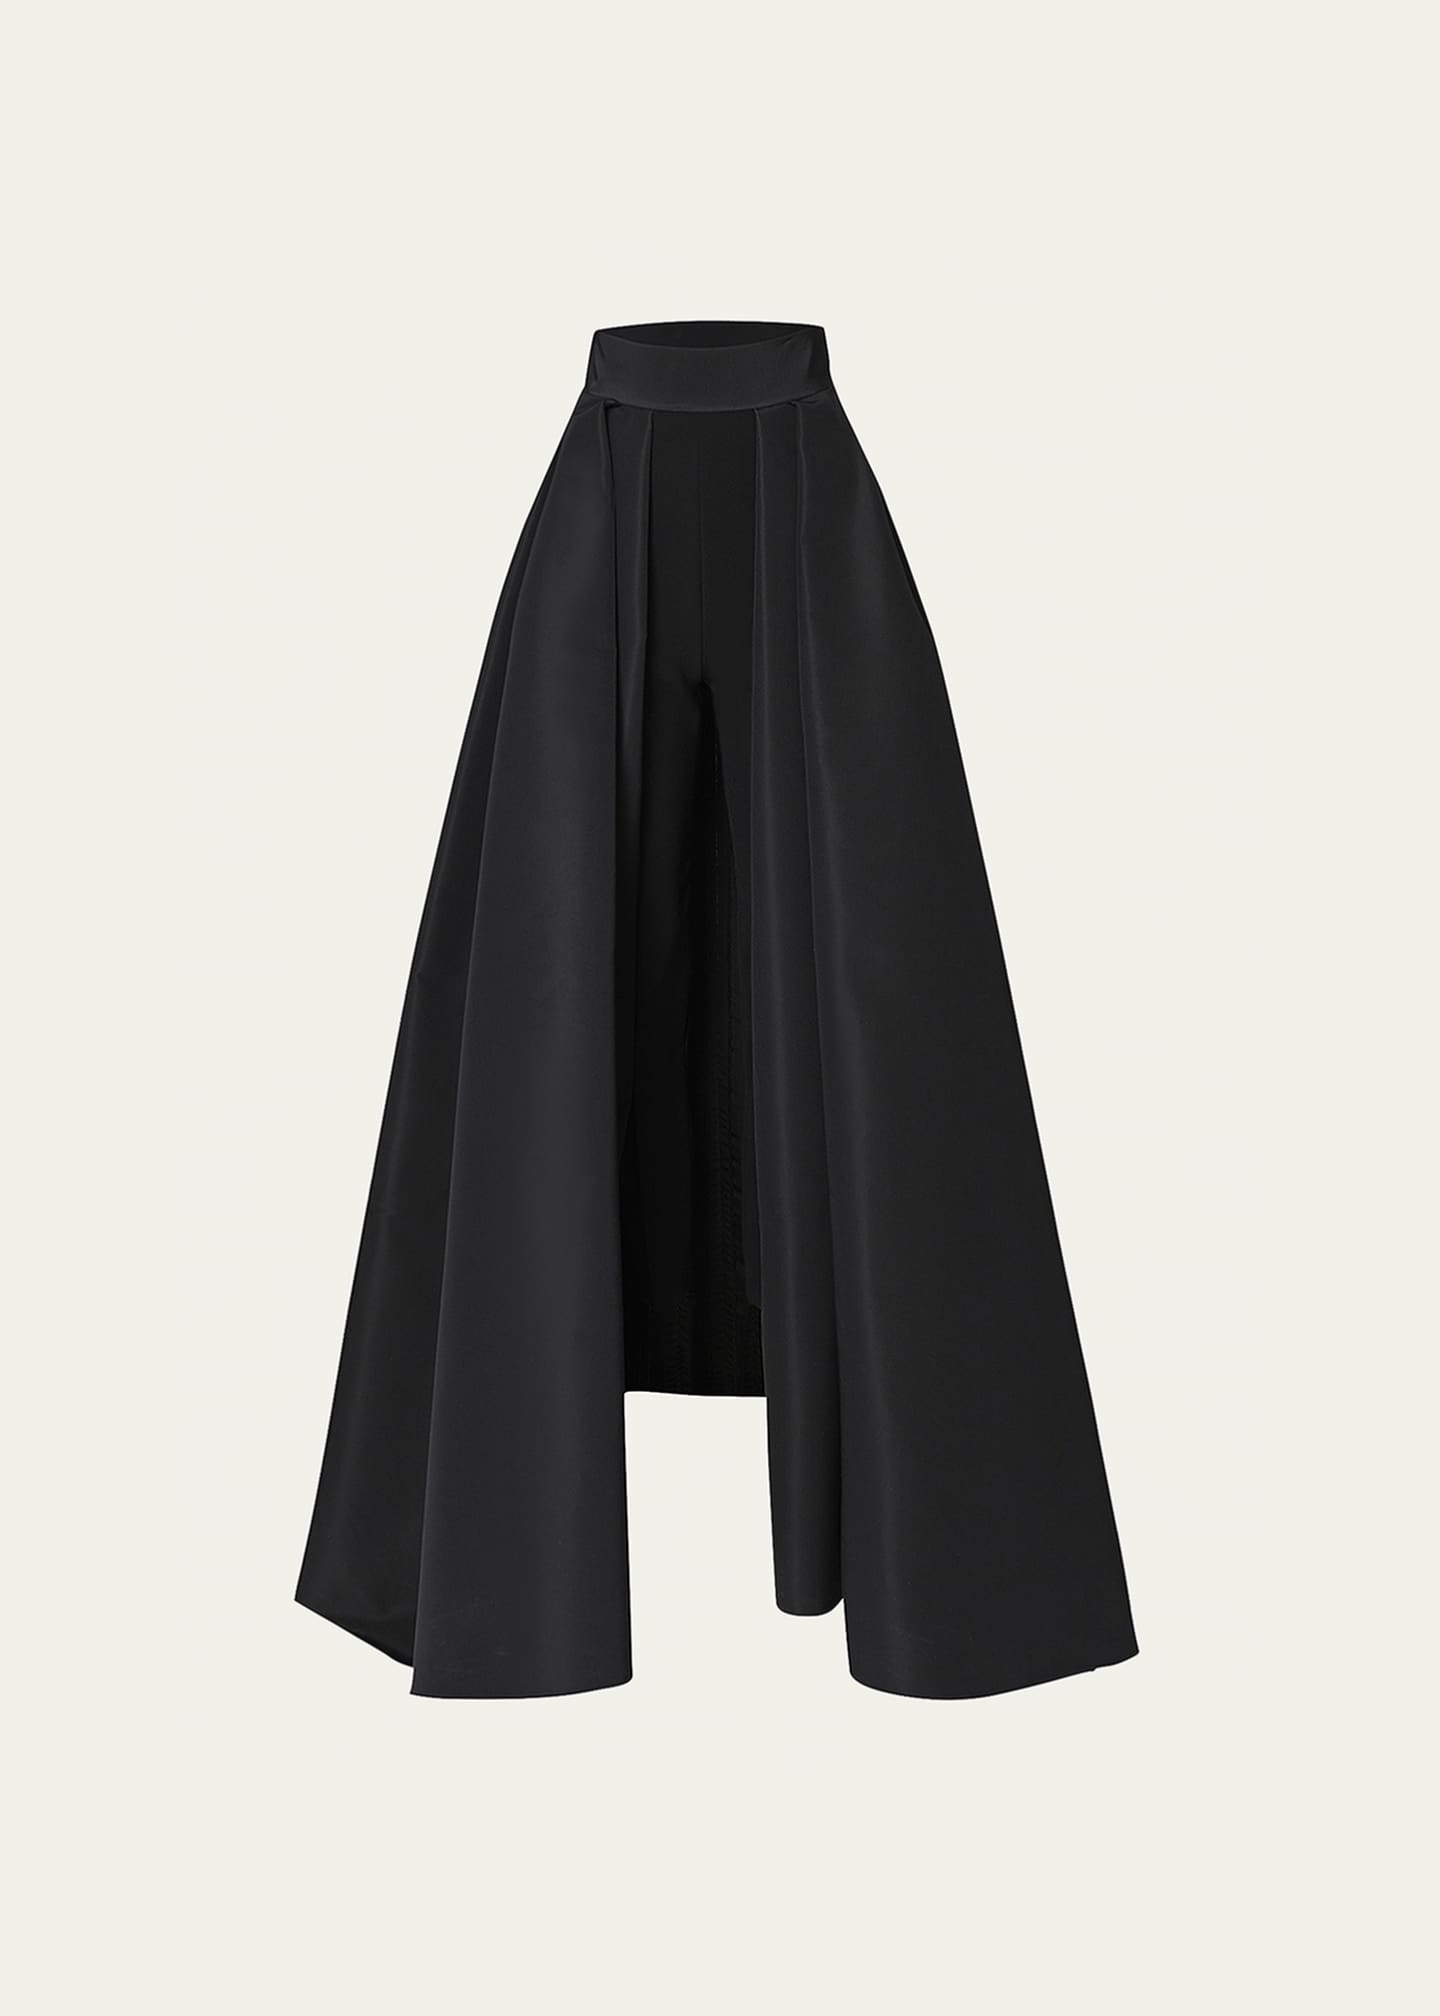 Pants Skirt Overlay | ecolesetformations.fr